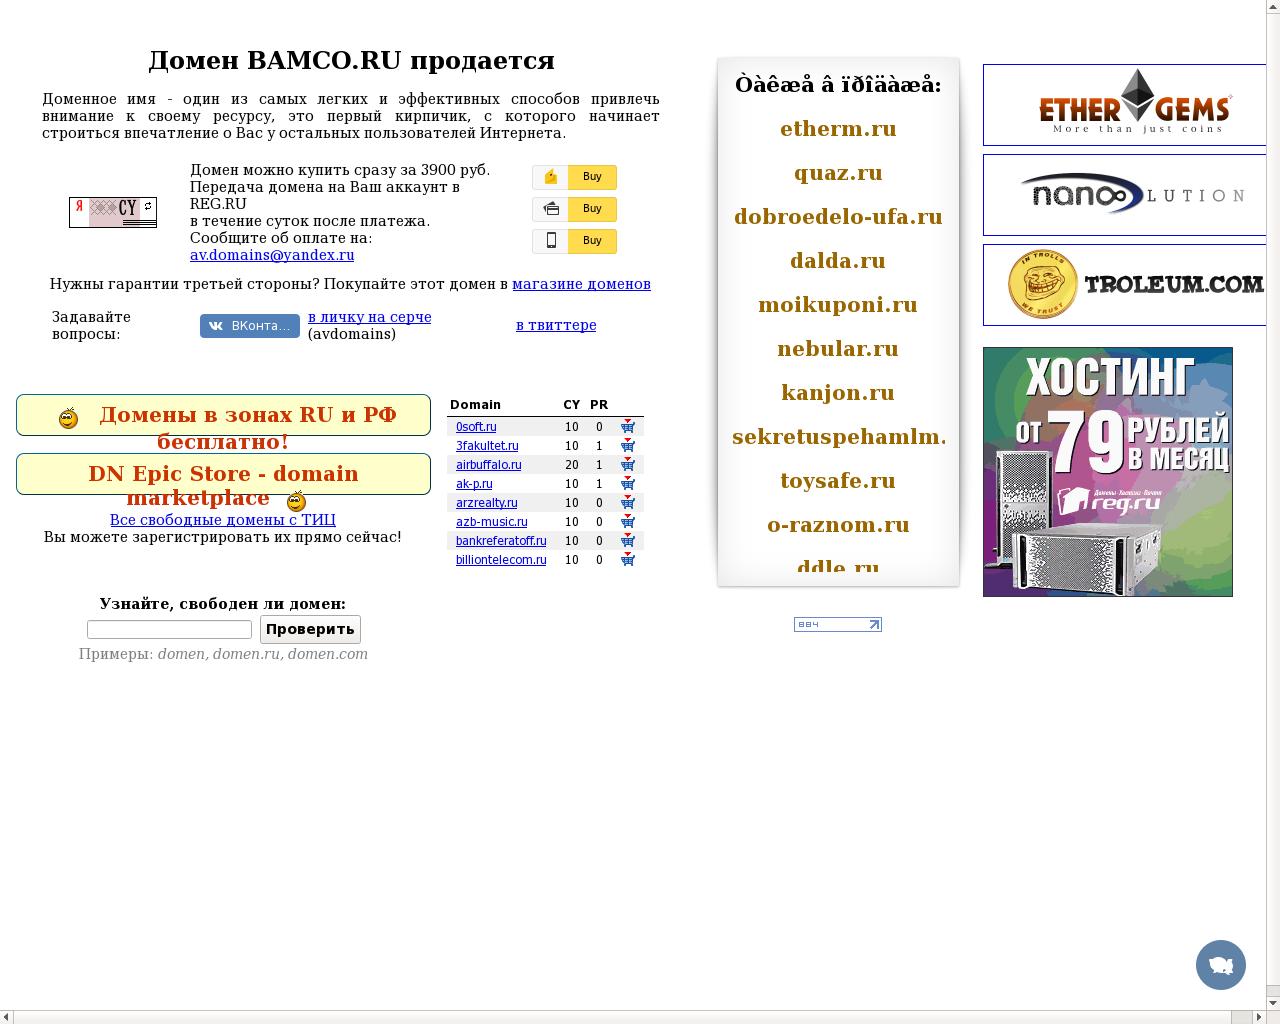 Изображение сайта bamco.ru в разрешении 1280x1024